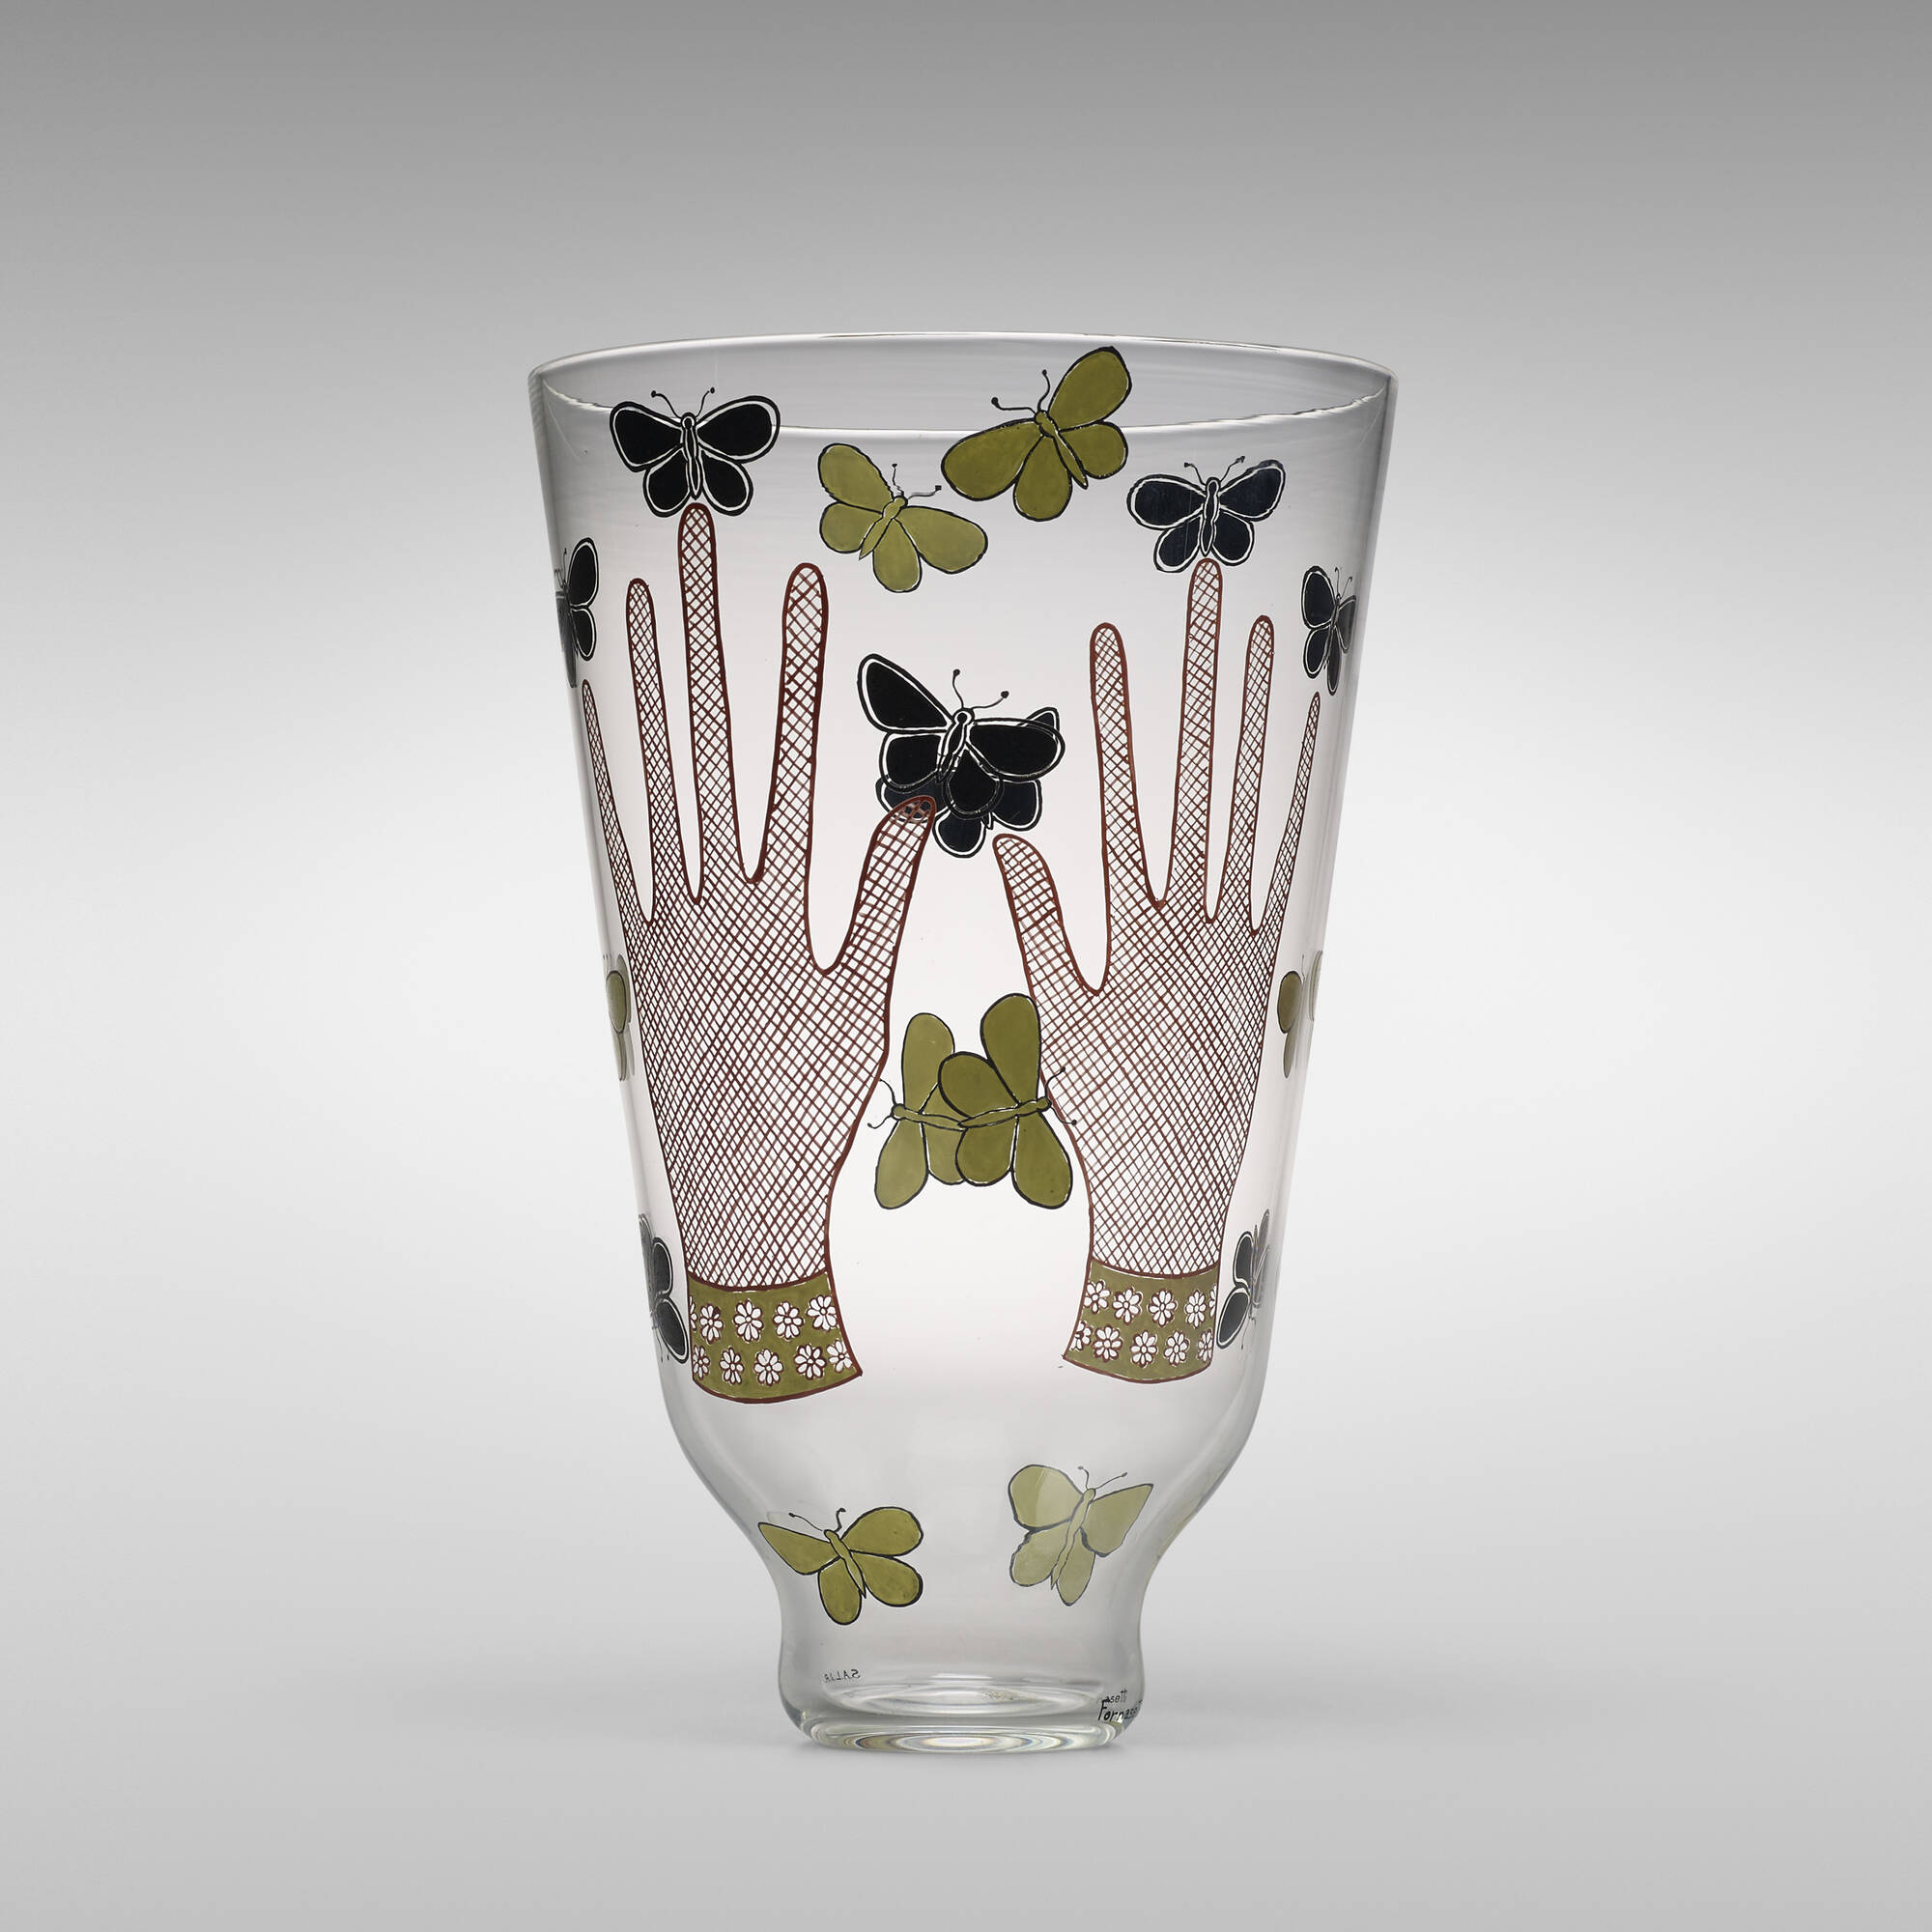 verbrand Postbode Veeg 252: PIERO FORNASETTI, Mani con Farfalle A Smalti vase < Important Italian  Glass, 13 June 2015 < Auctions | Wright: Auctions of Art and Design